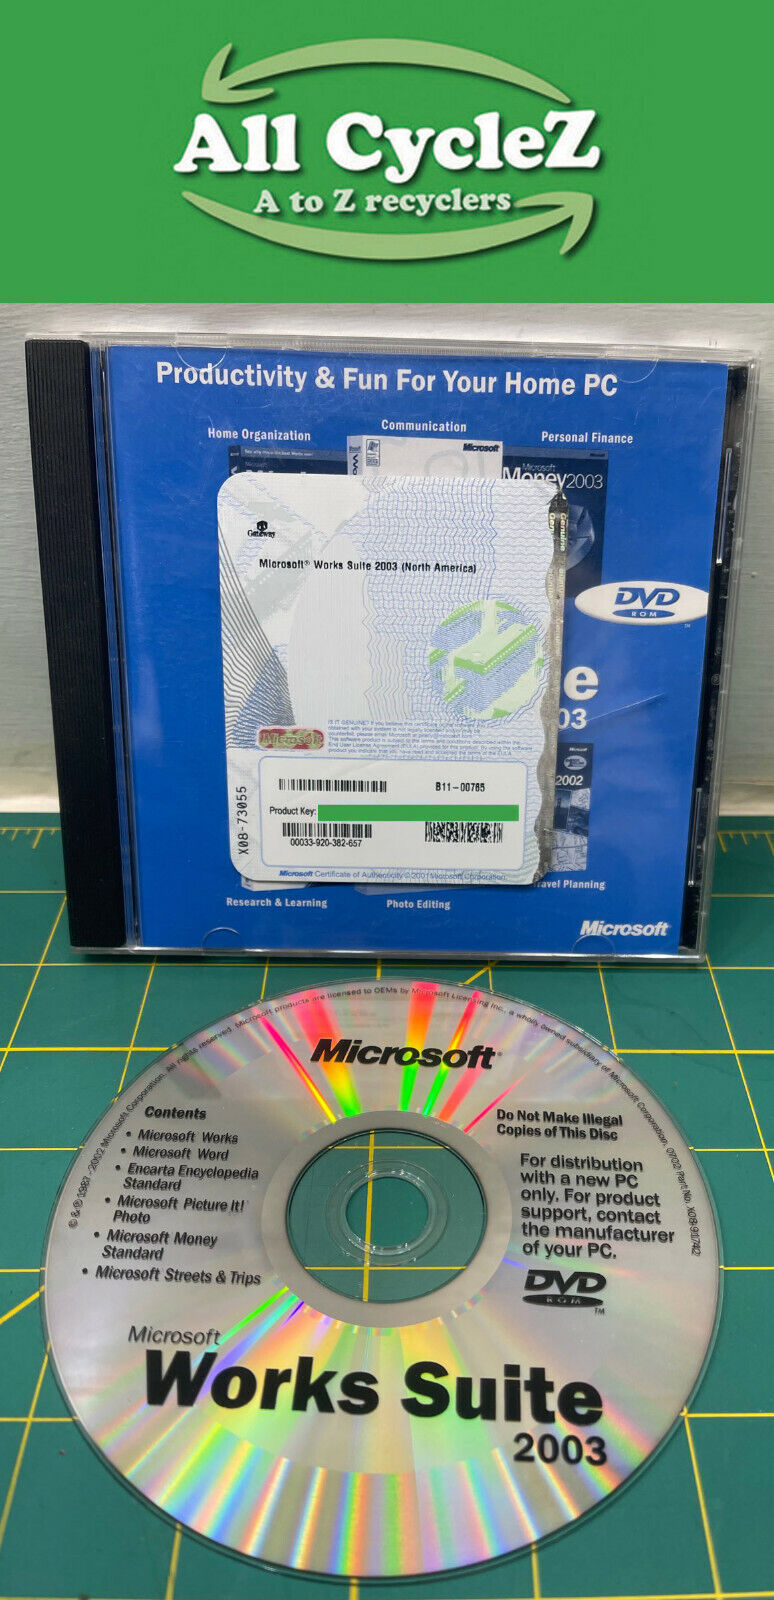 Windows XP - Compatible
Microsoft Office - Compatible